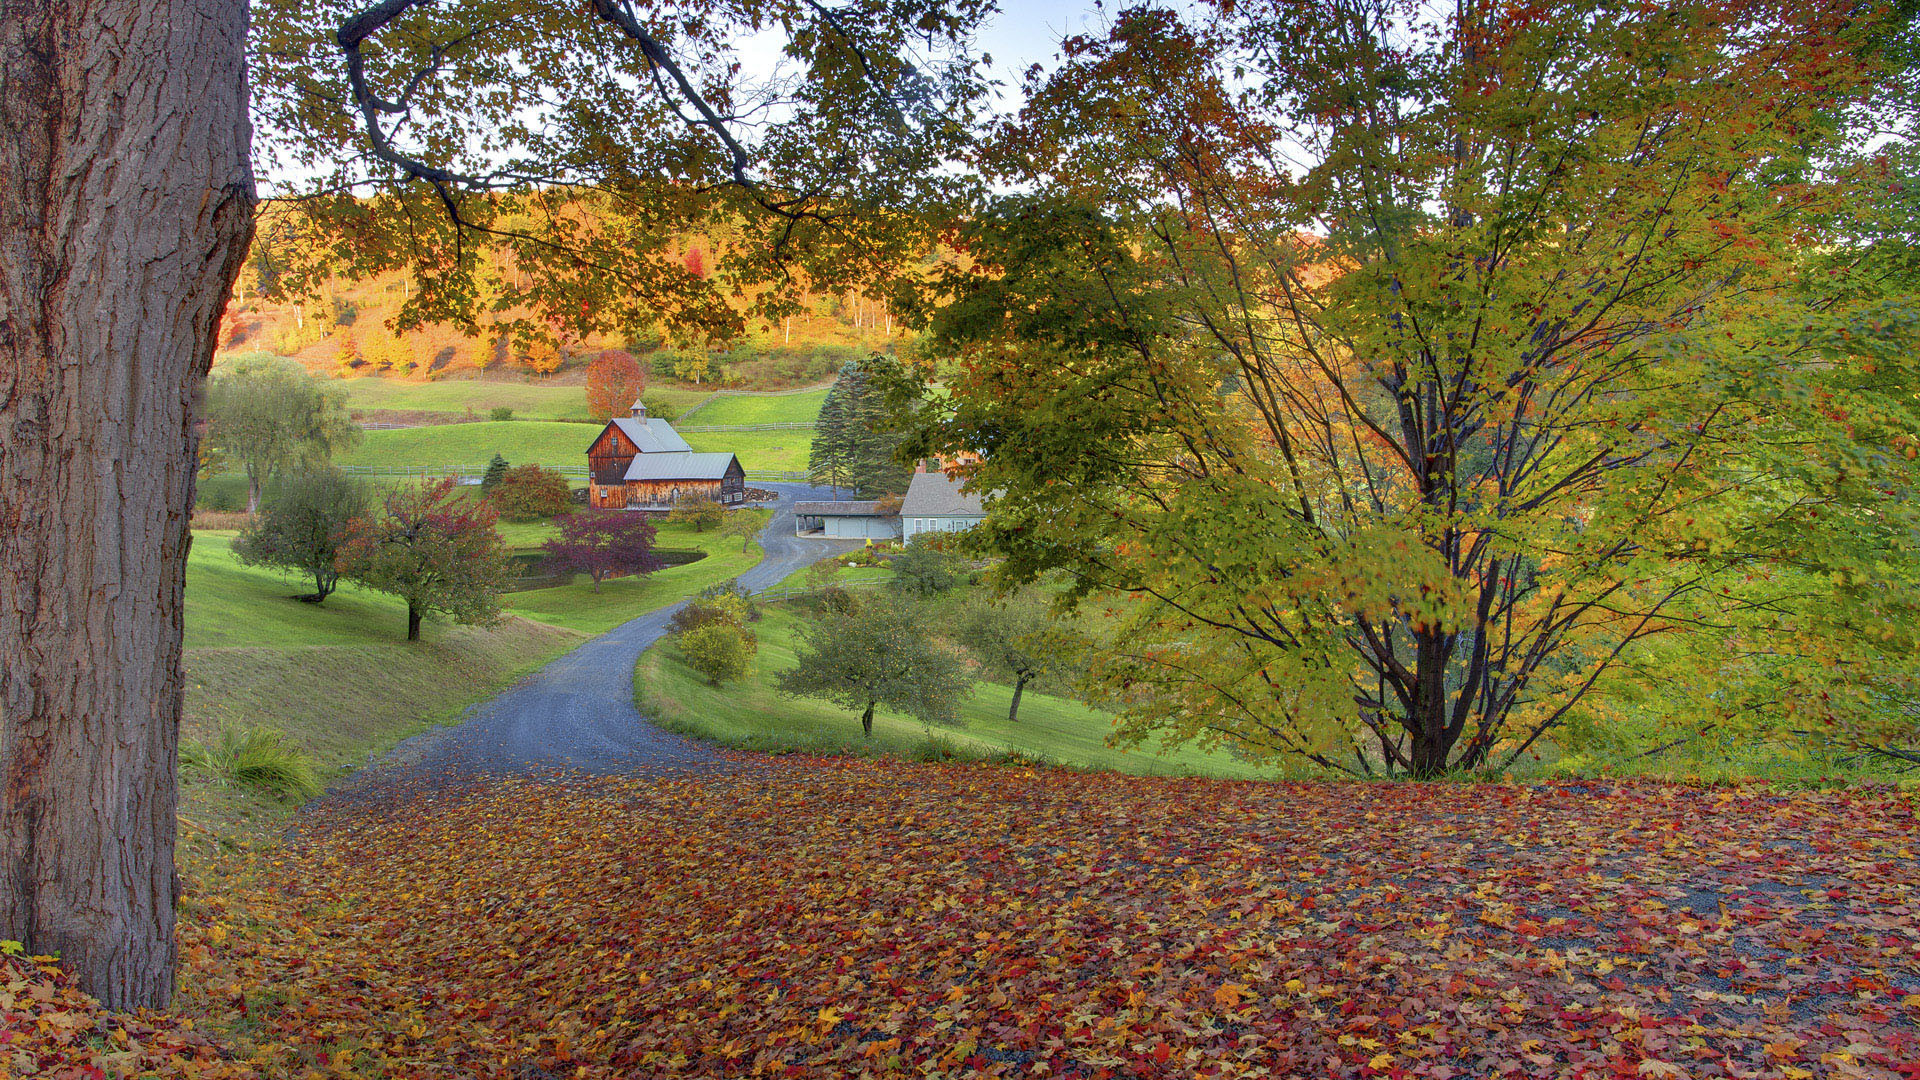 1920x1080 Fall Scenery | Wallpaper, autumn, beautiful, nature, scenery, garden (#